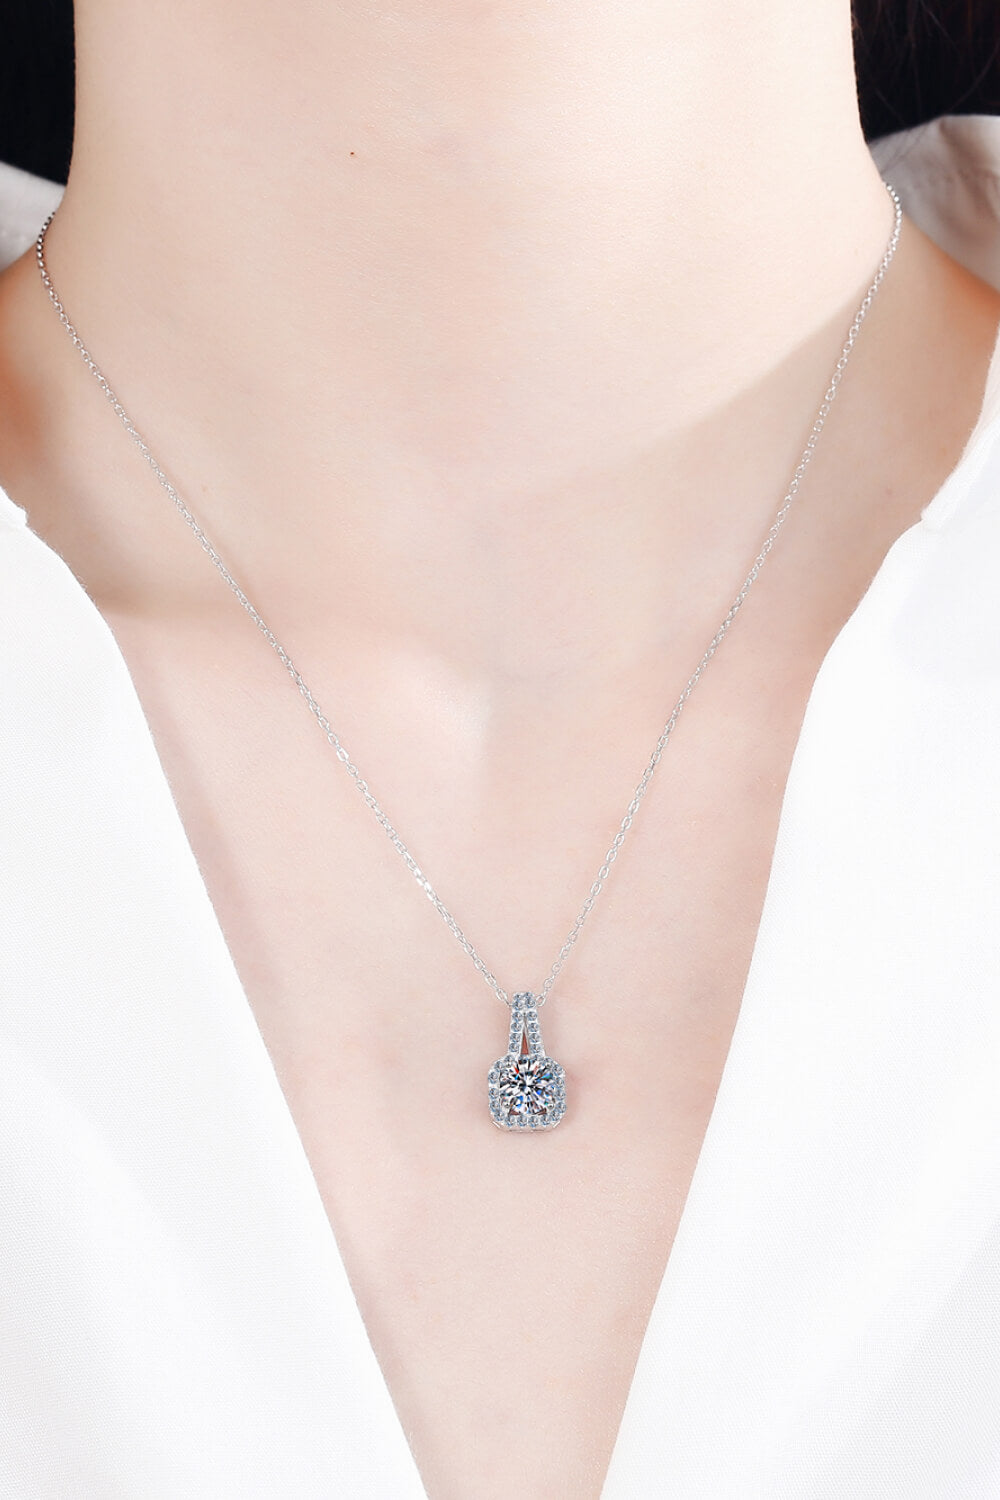 Look Amazing 2 Carat Moissanite Pendant Necklace - Sharon David's